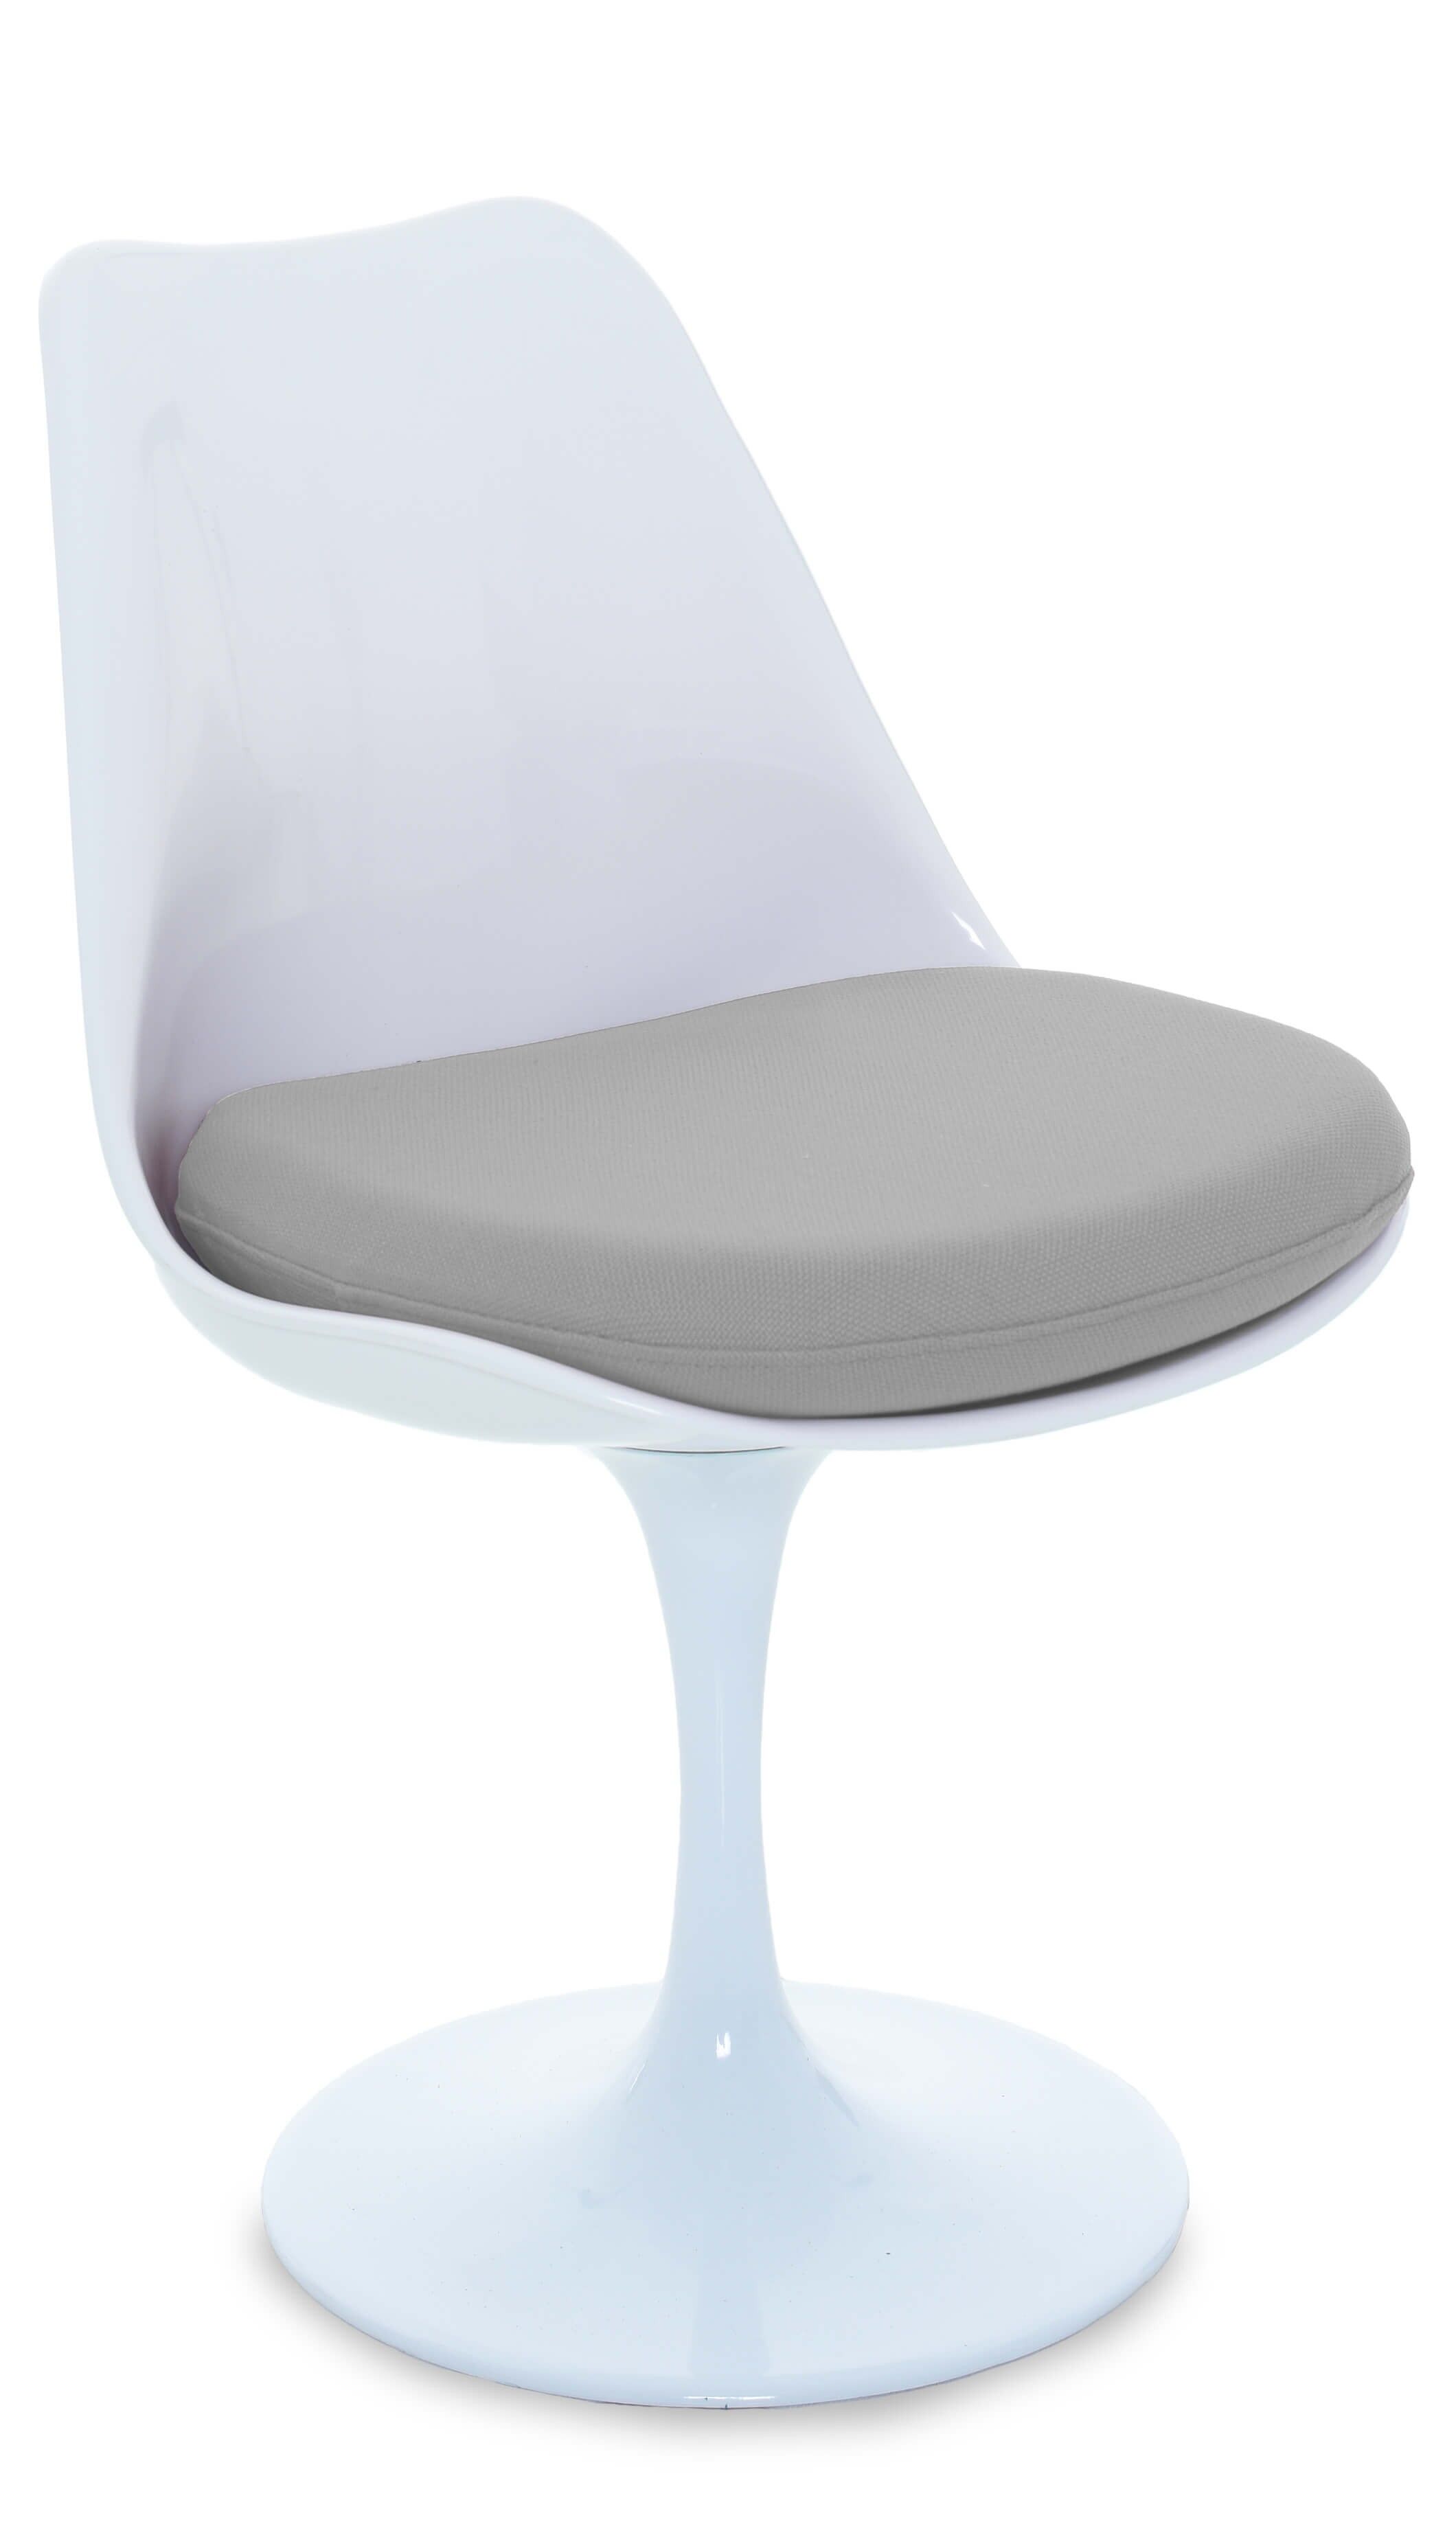 FURNMOD Design Your Space Silla Tulip Chair con cojín de algodón - Gris Claro - Plástico ABS inyectado - Sillas con Cojín